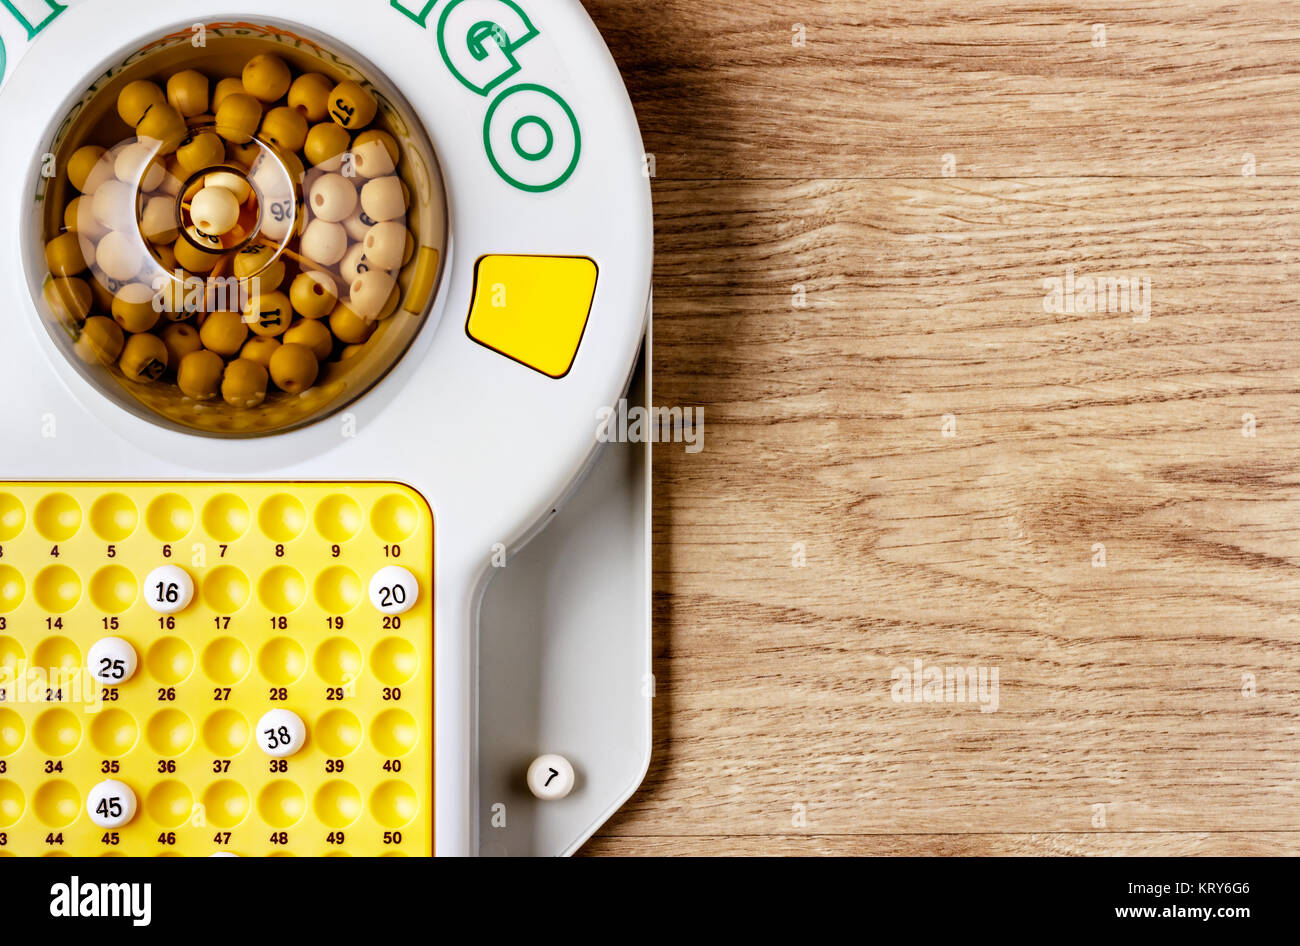 Bingo Game. Stock Photo